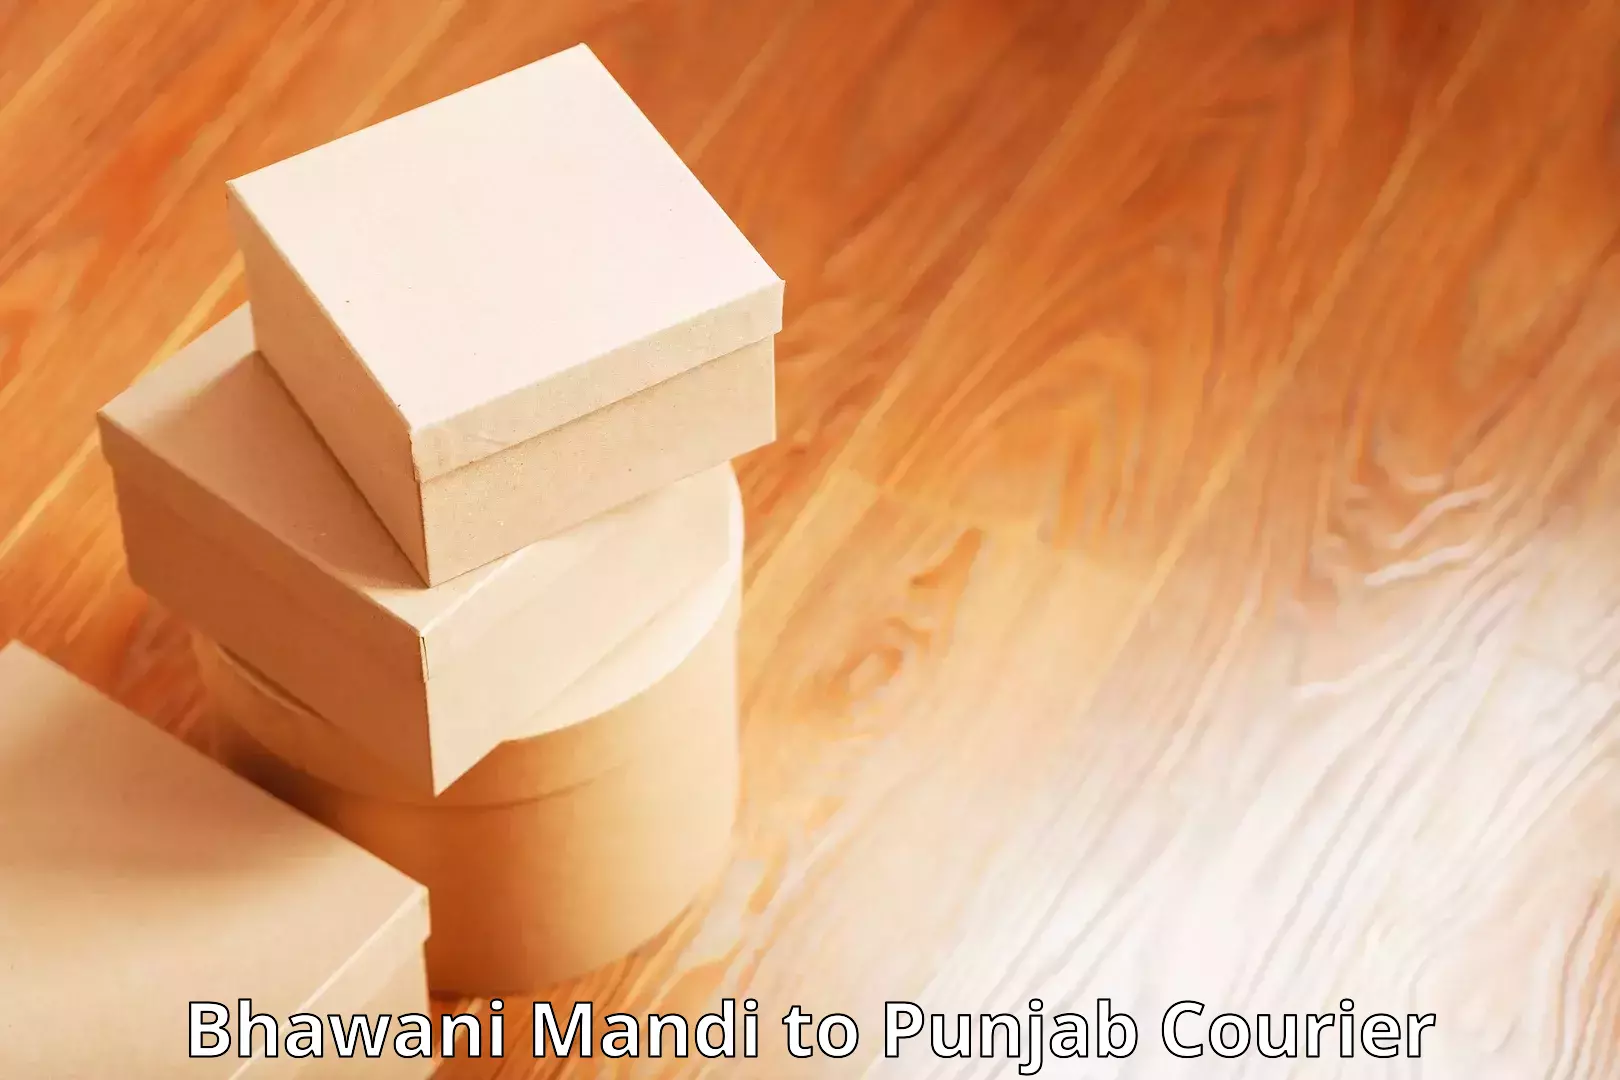 High-priority parcel service Bhawani Mandi to Punjab